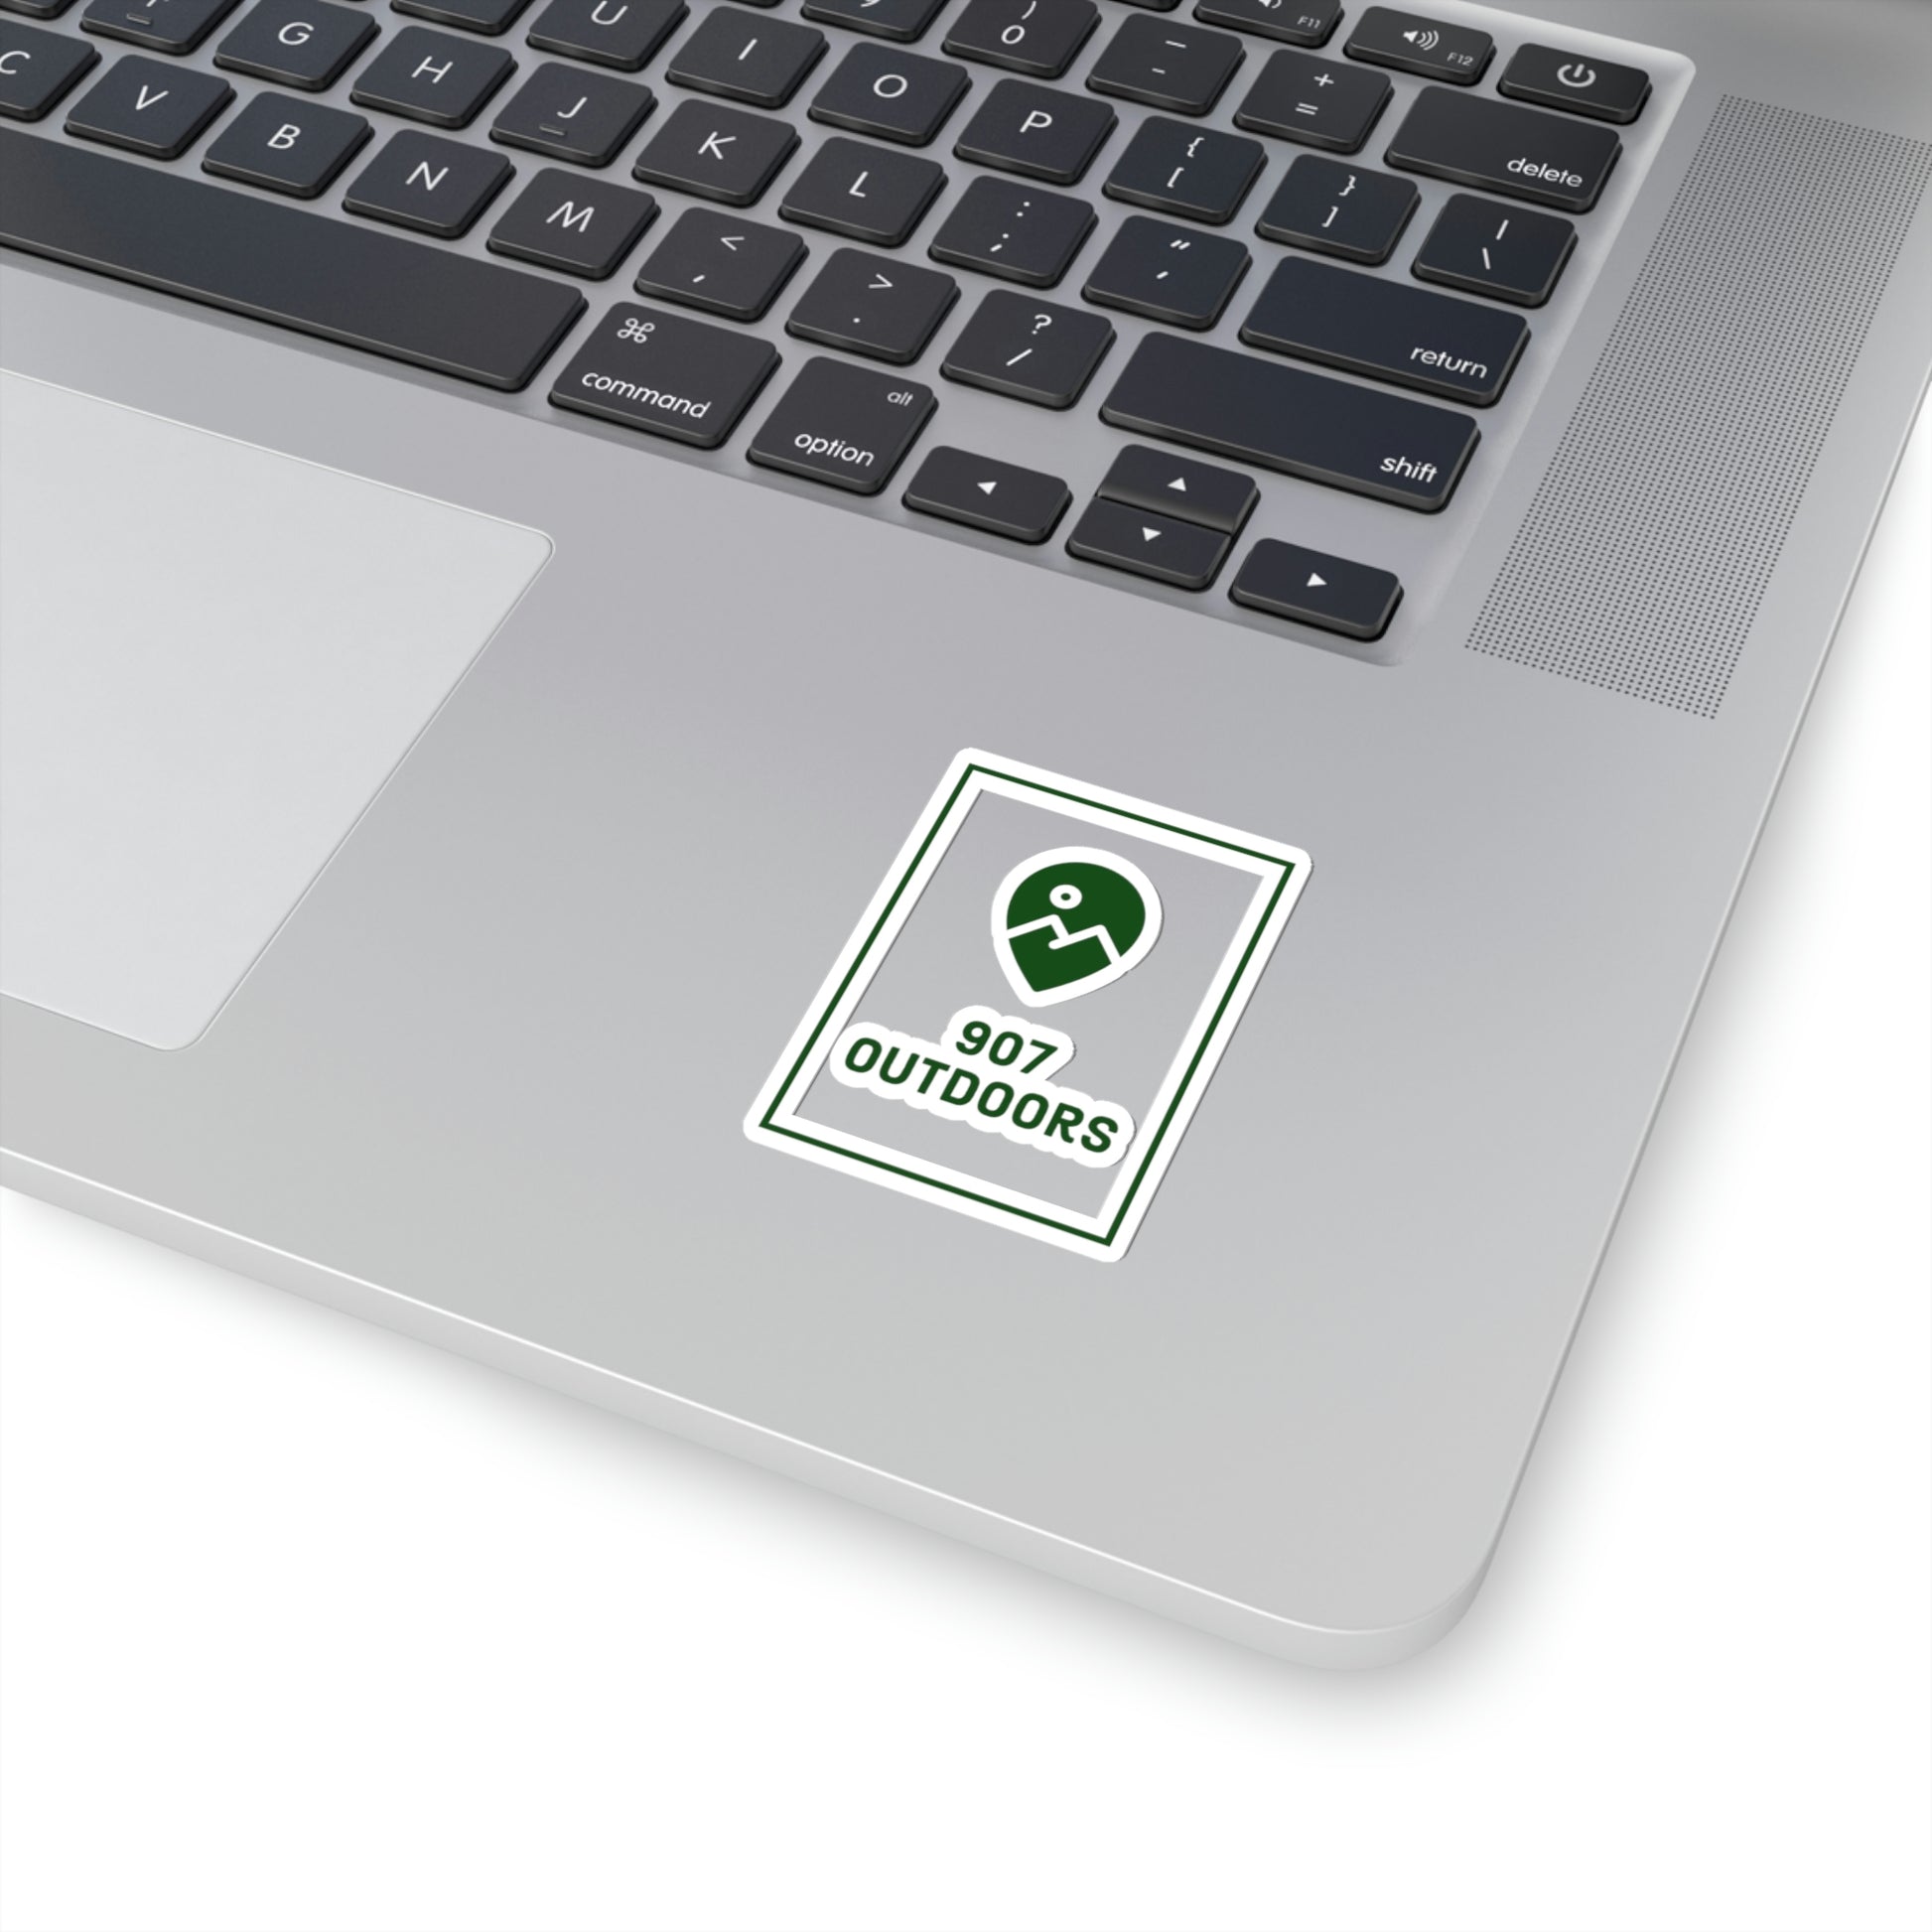 Green logo Kiss-Cut Stickers - 907Outdoors